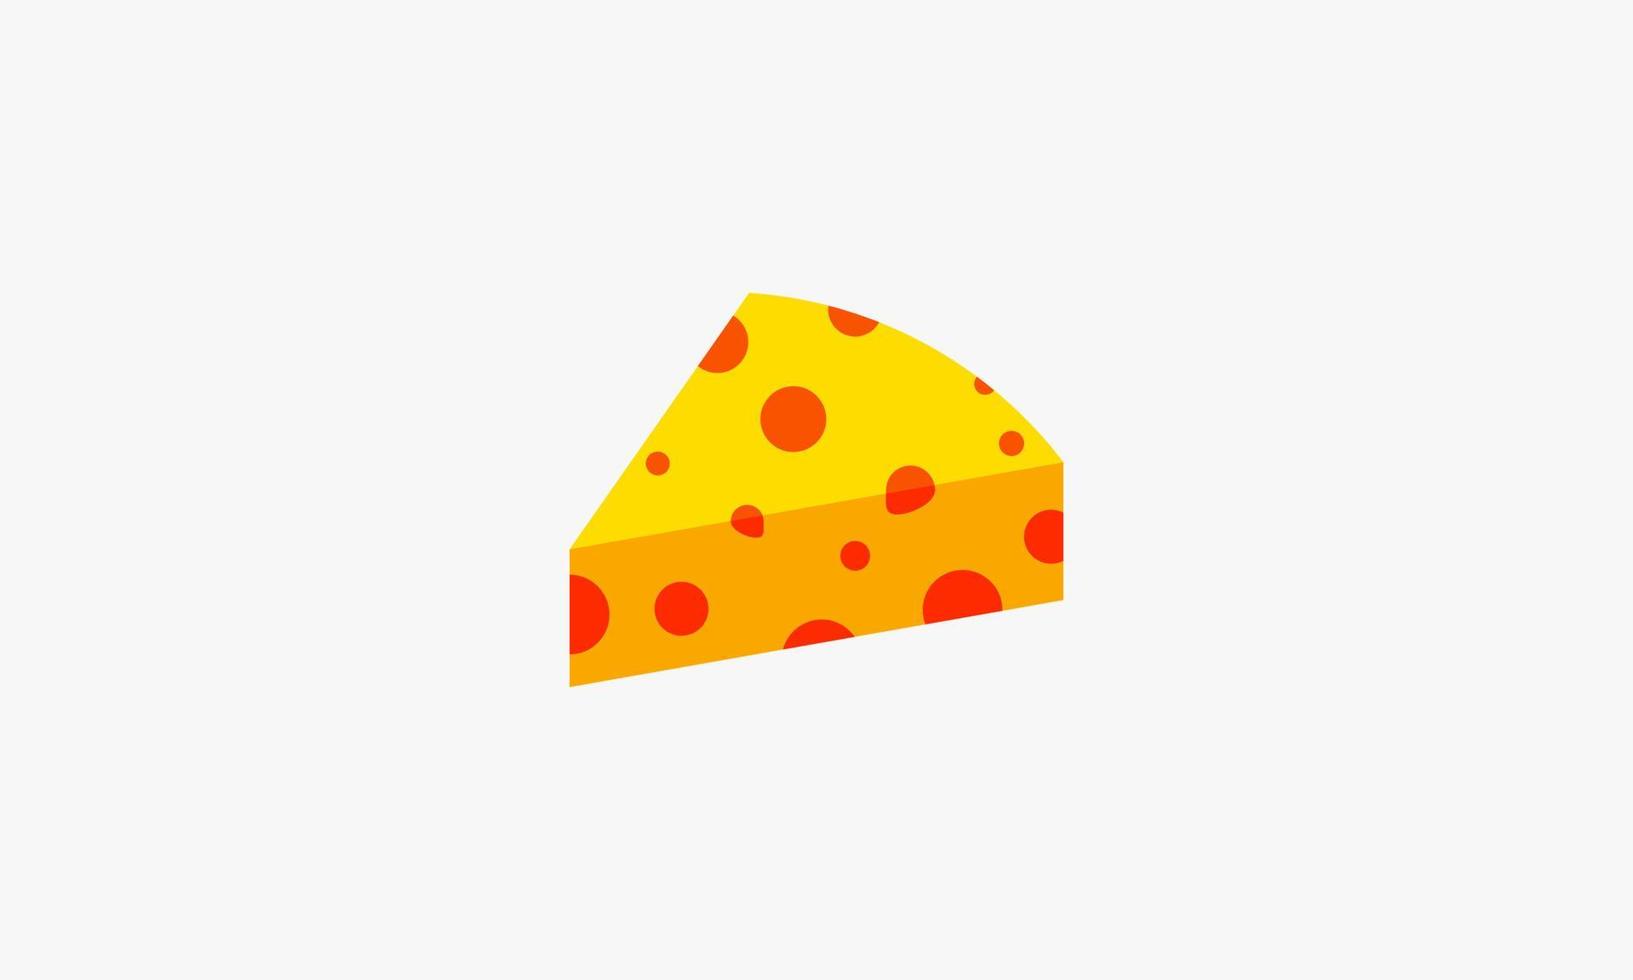 cheese slice graphic design. tasty food vector illustration.